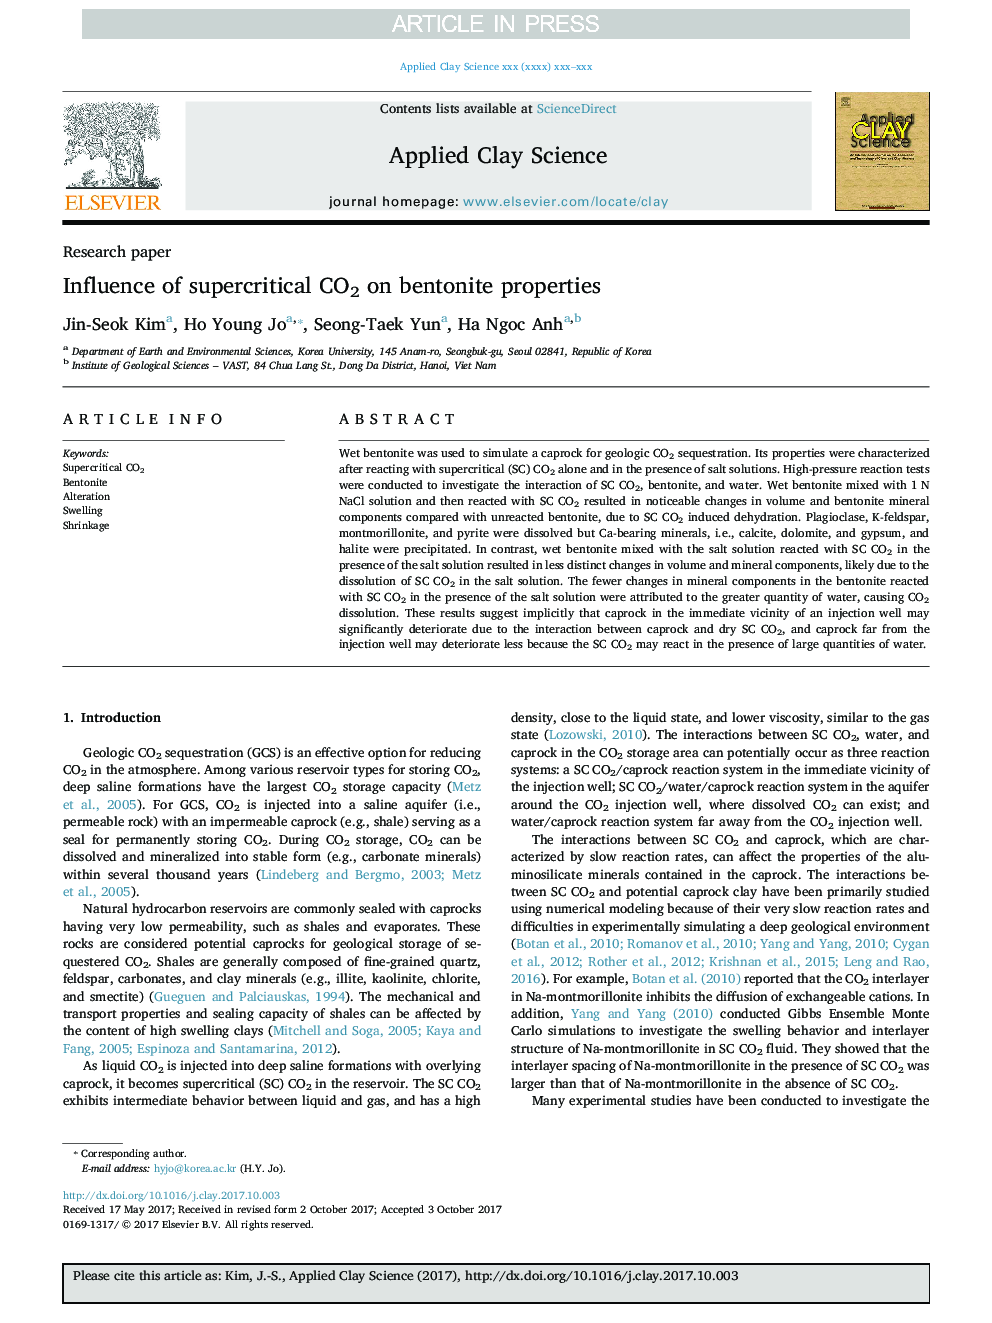 Influence of supercritical CO2 on bentonite properties